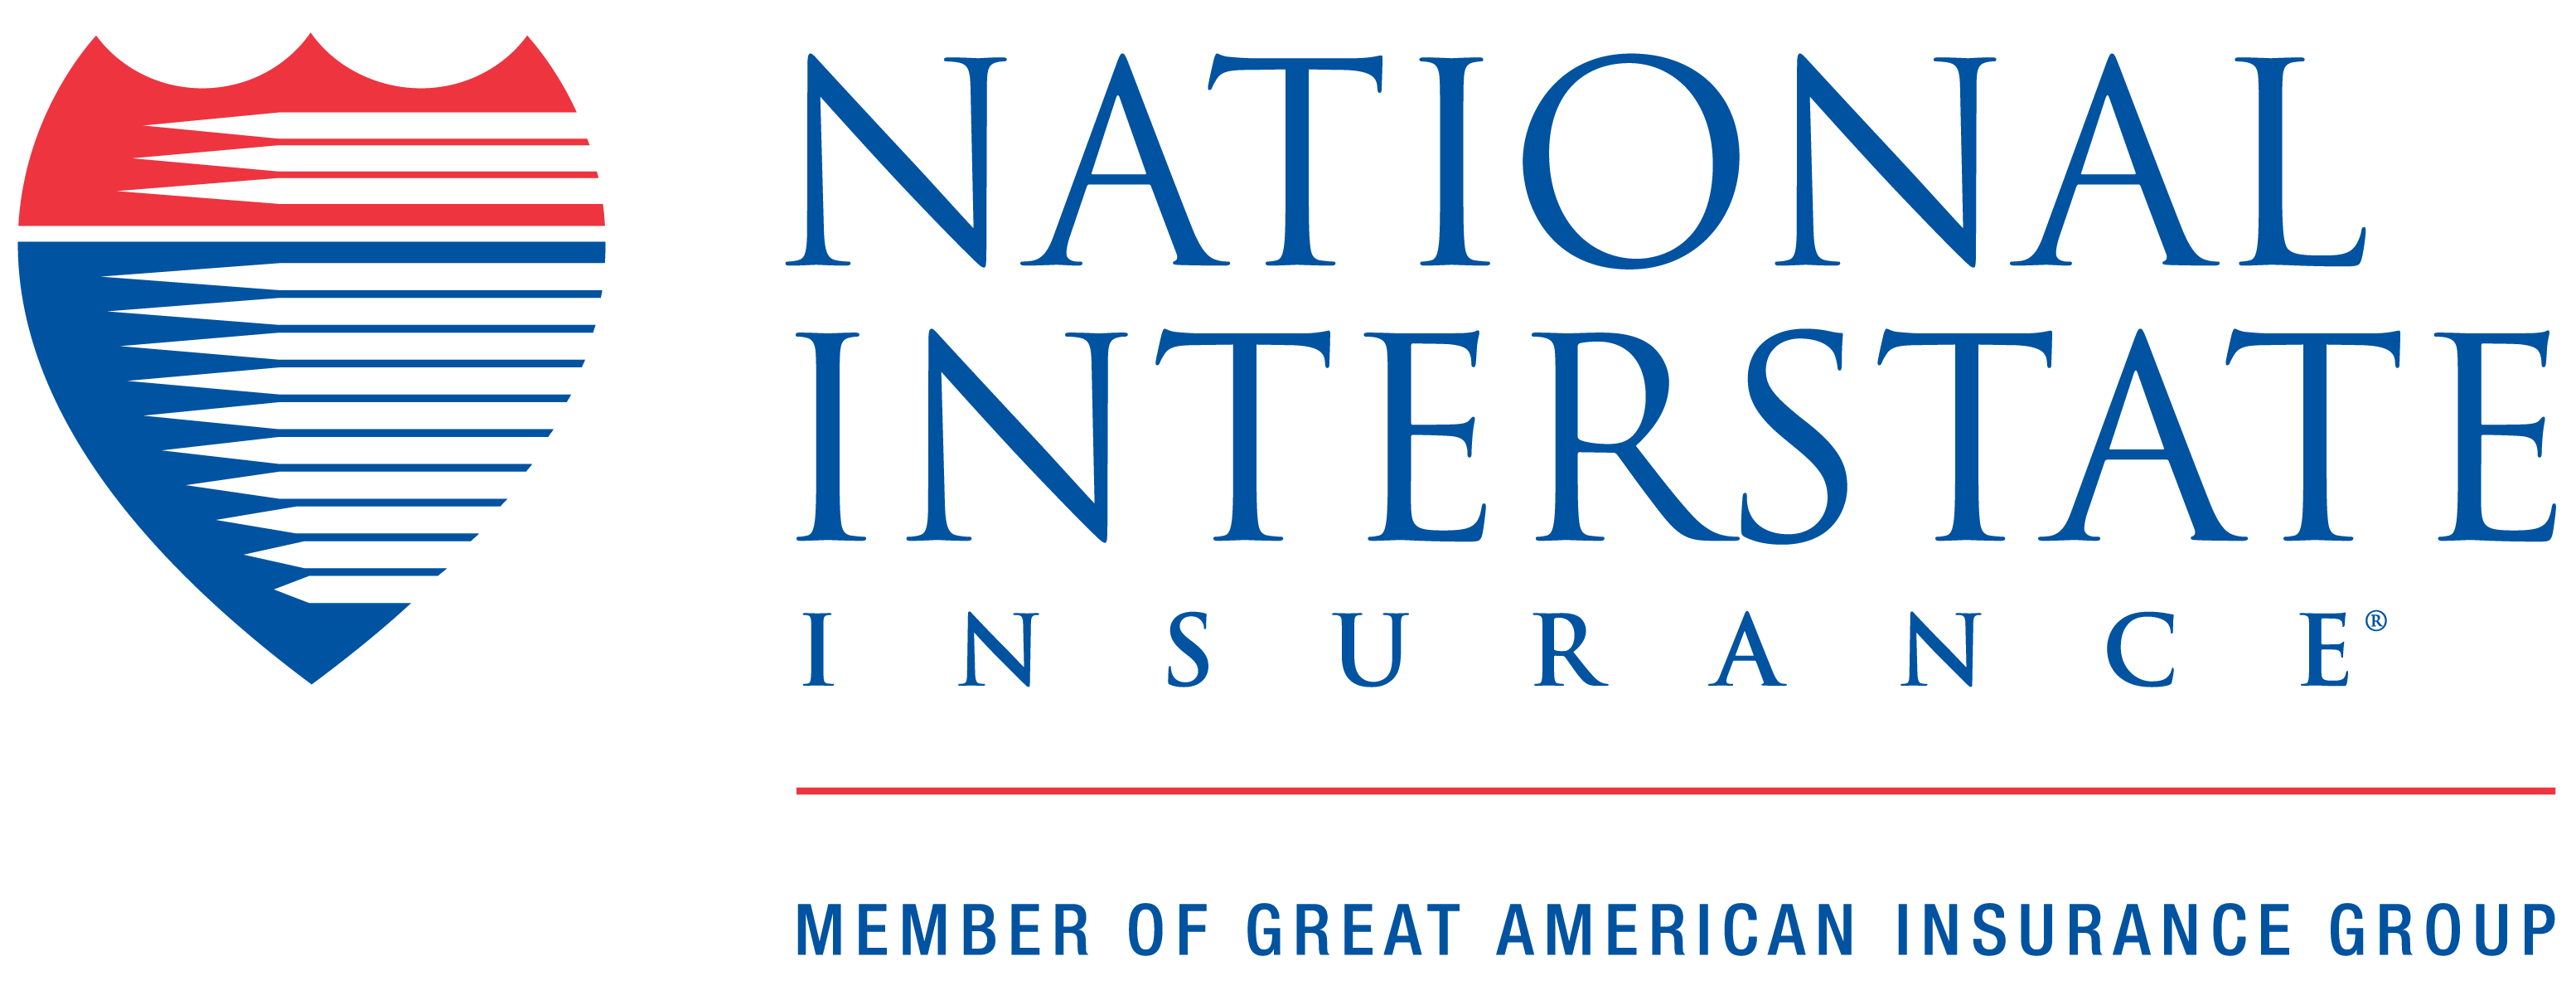 National Interstate Insurance Company logo